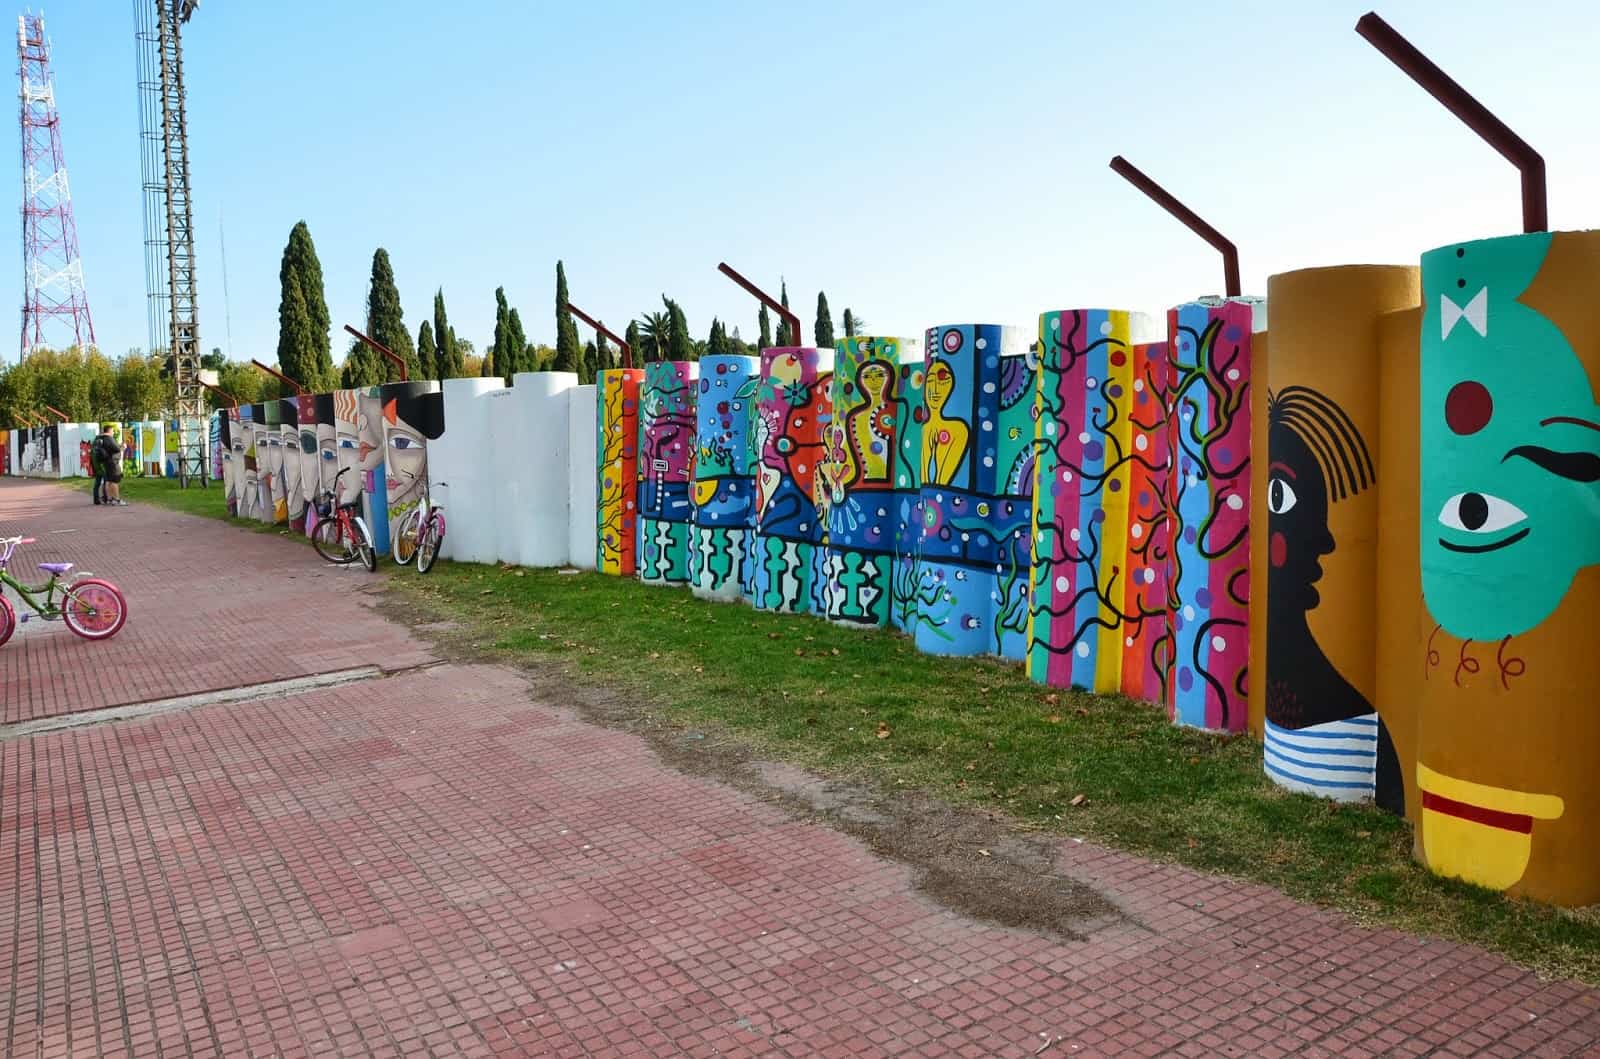 Stadium murals in Colonia del Sacramento, Uruguay